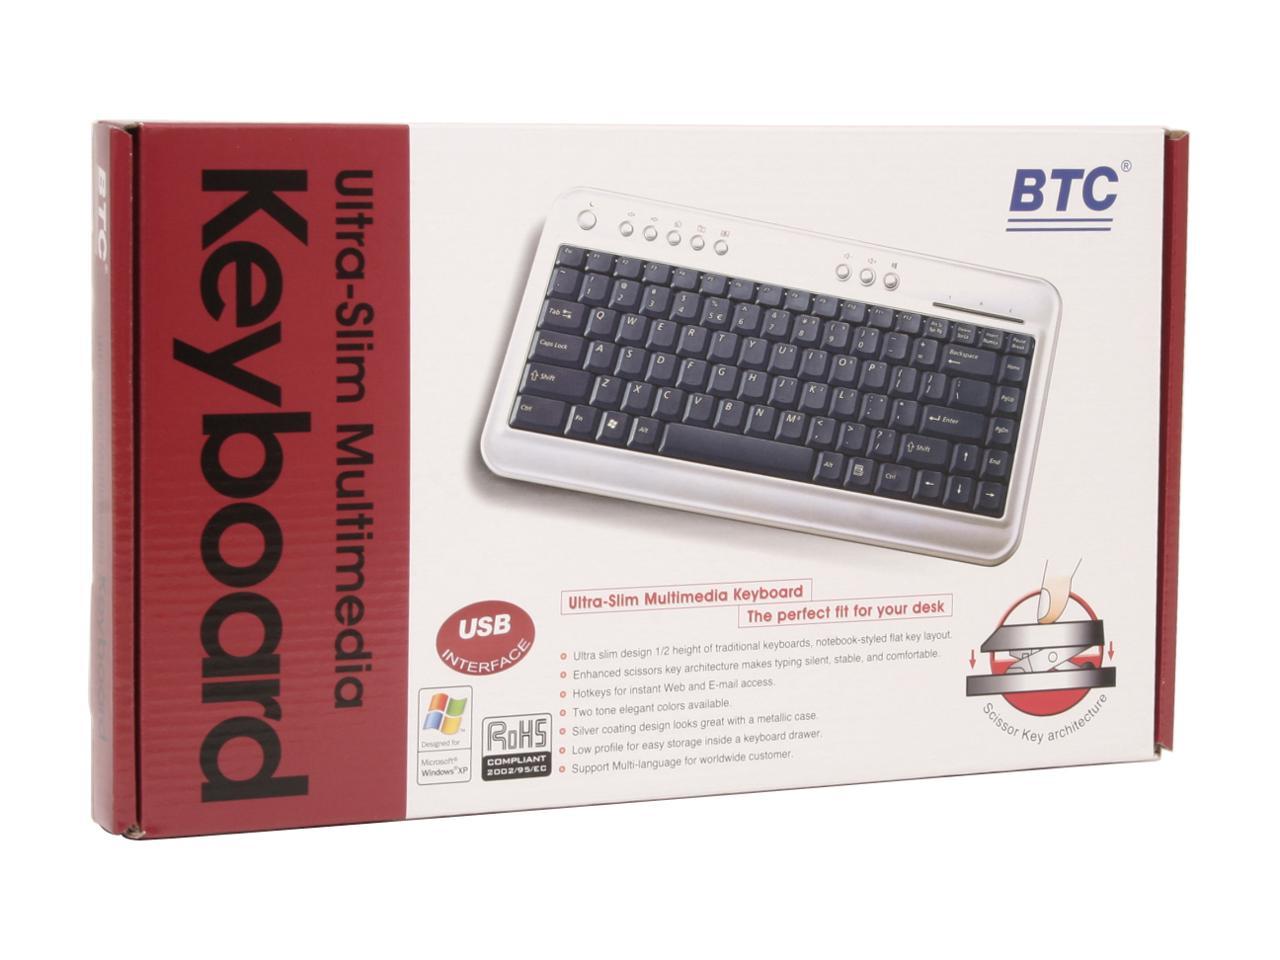 btc model 6100 keyboard